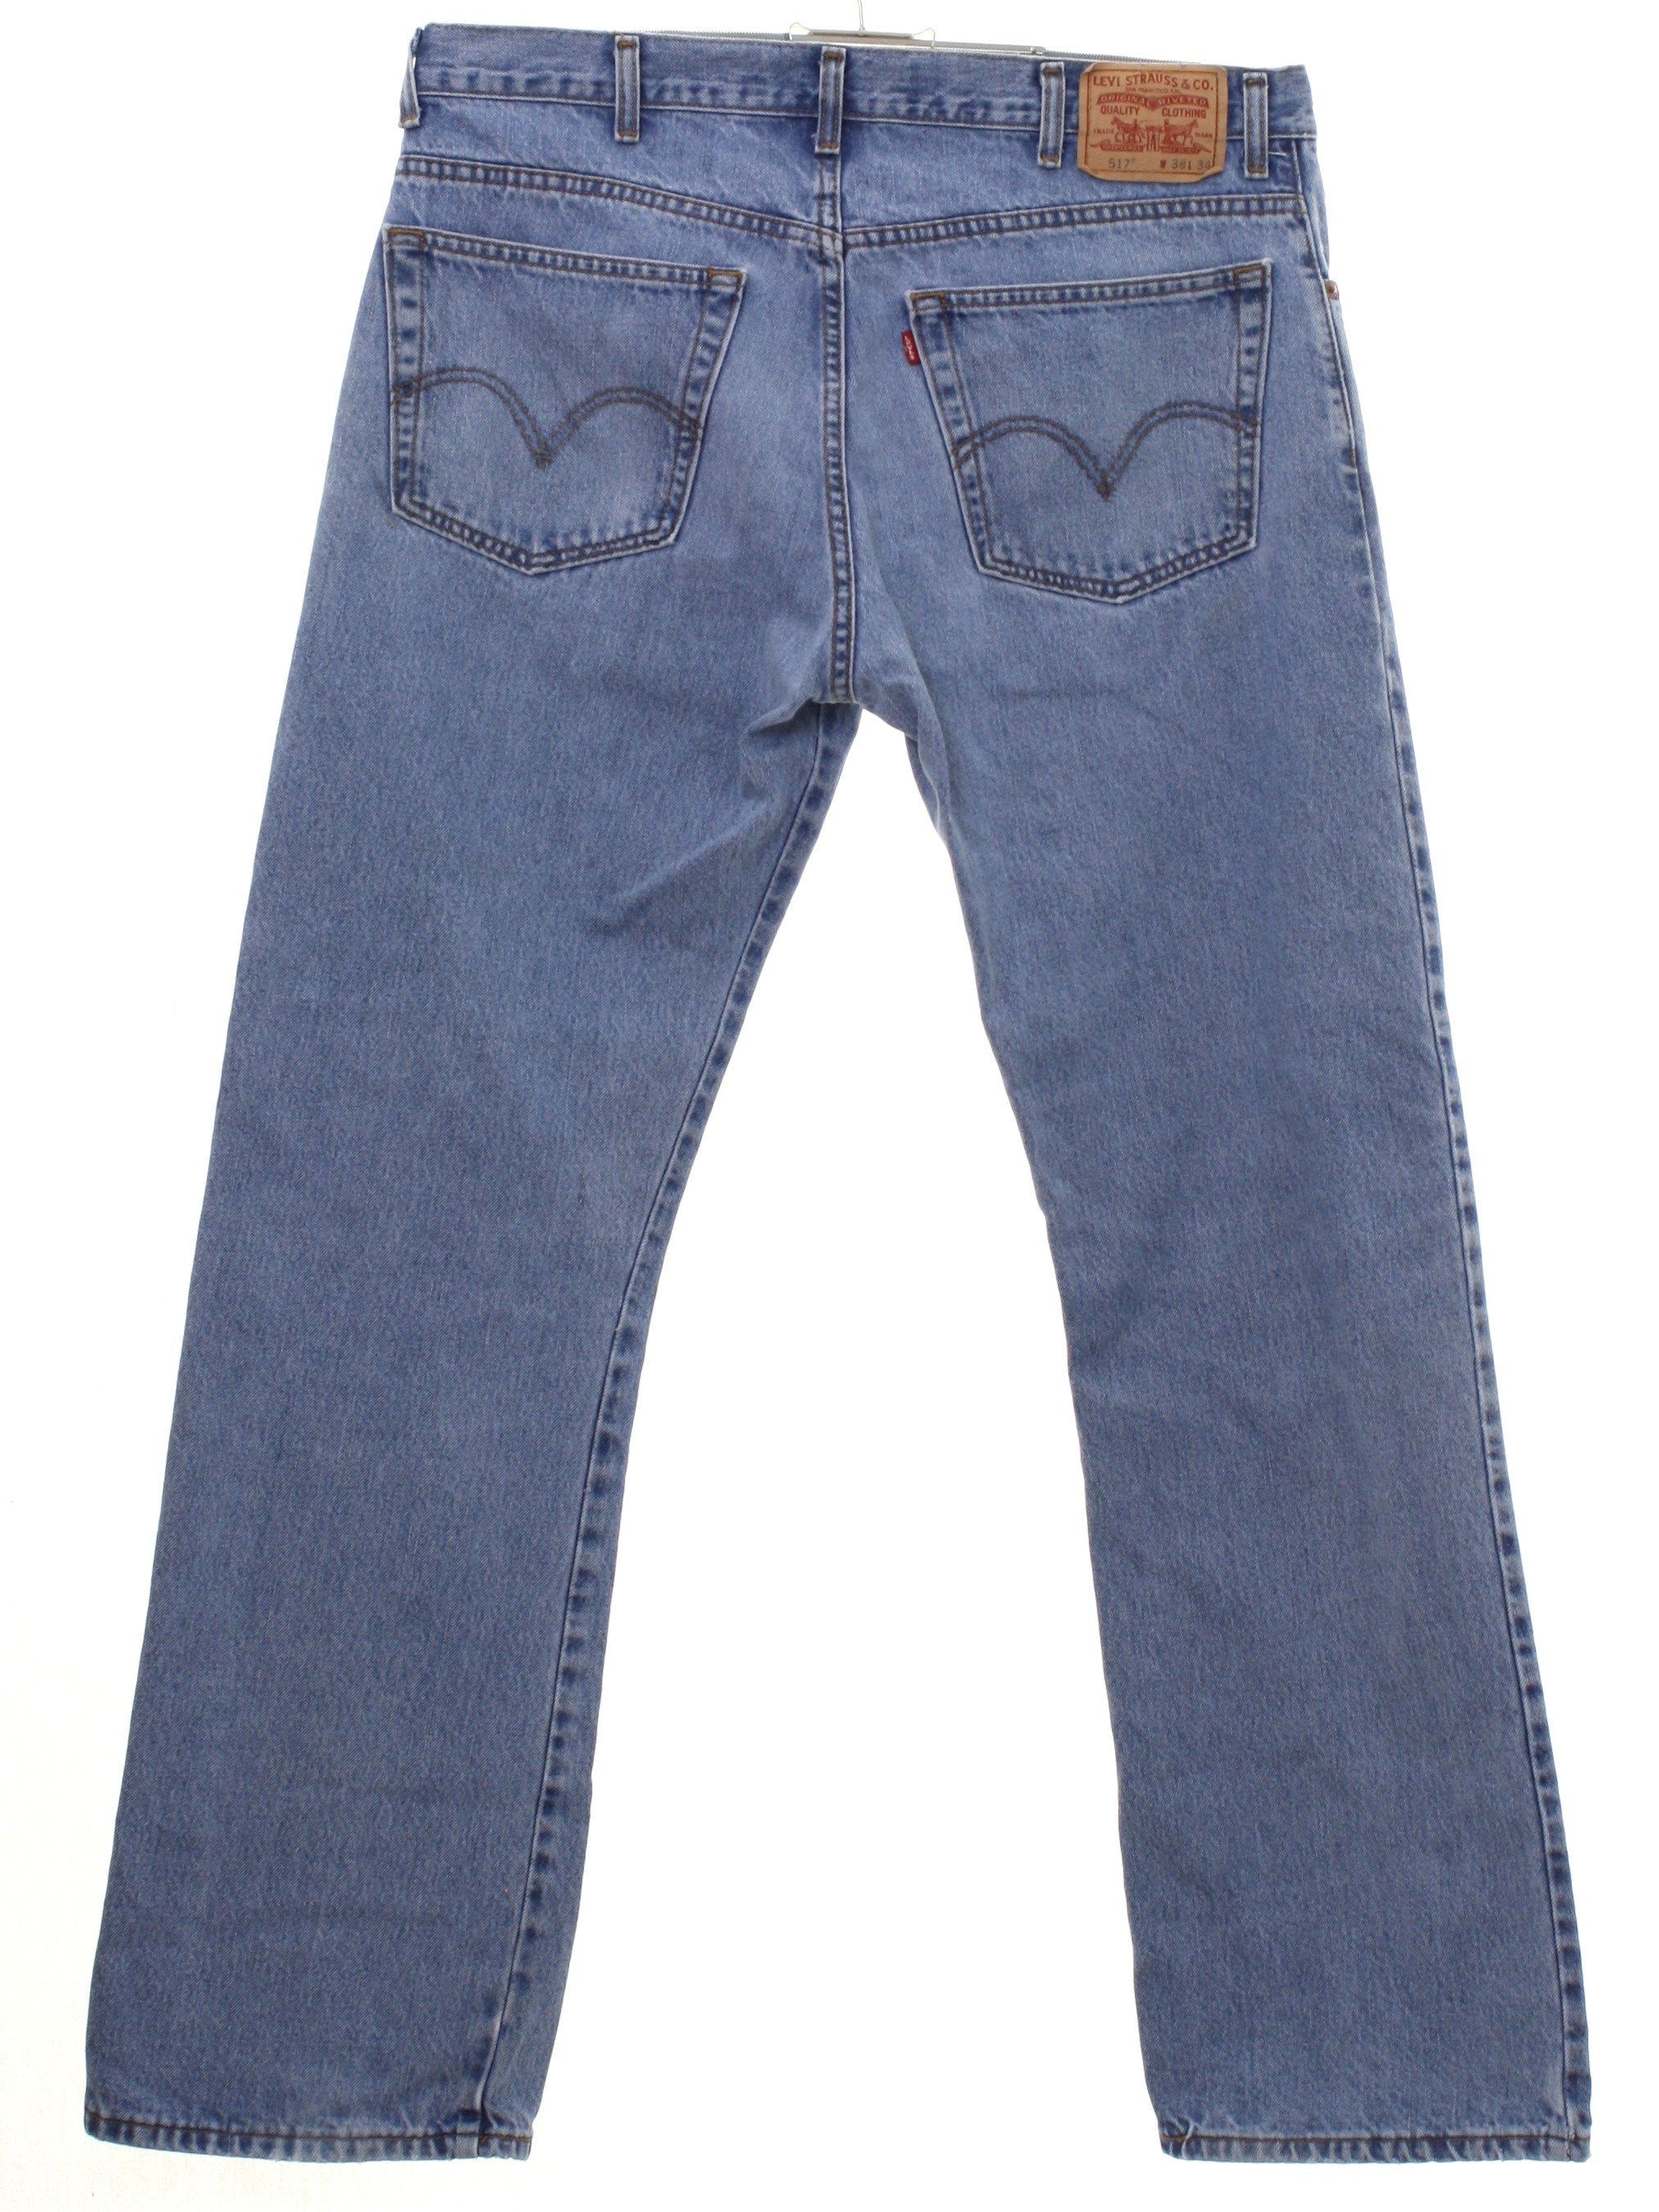 Levis Nineties Vintage Flared Pants / Flares: 90s -Levis- Mens medium ...